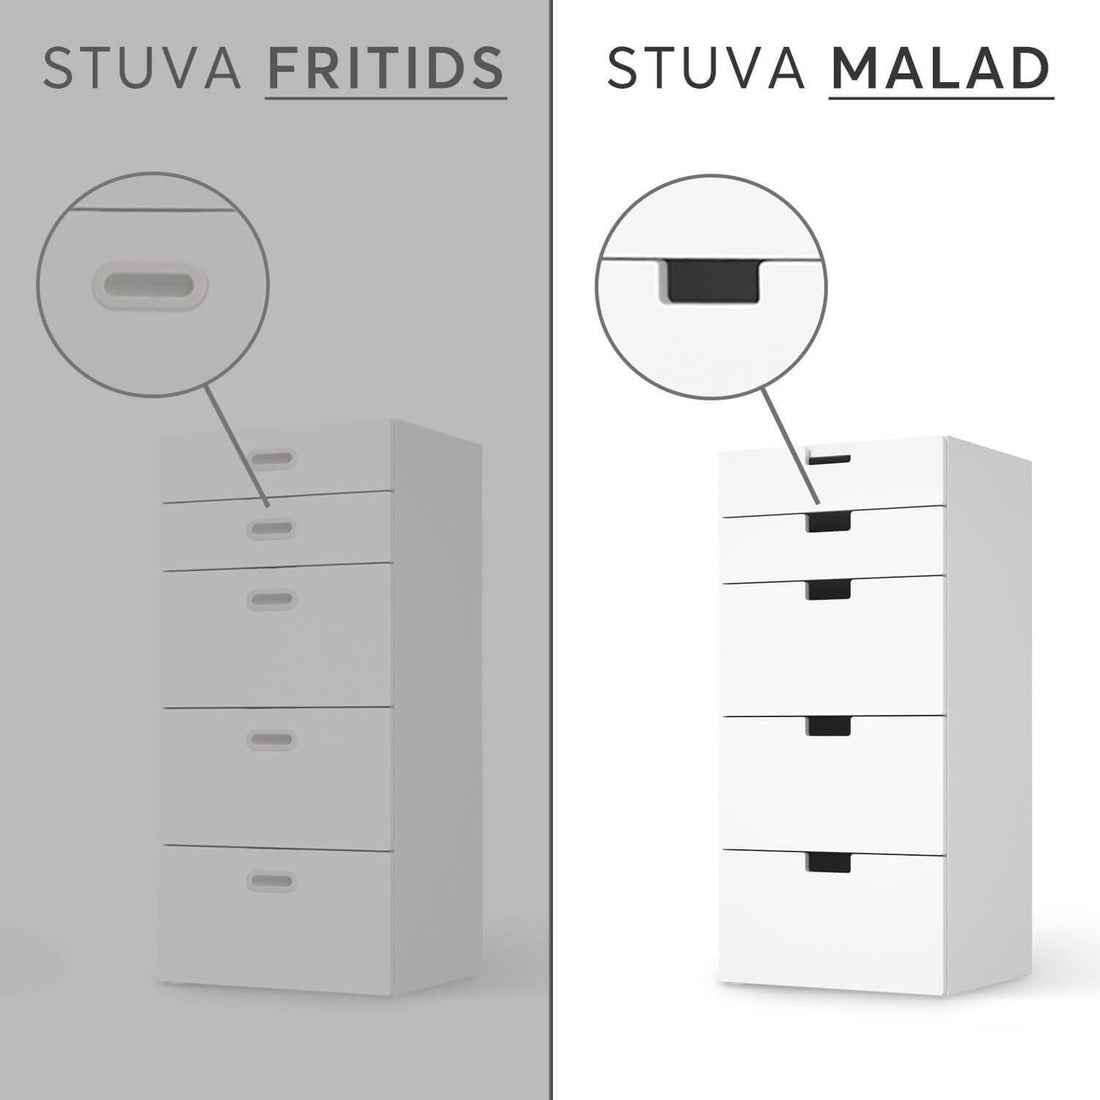 Vergleich IKEA Stuva Malad / Fritids - Working Cars